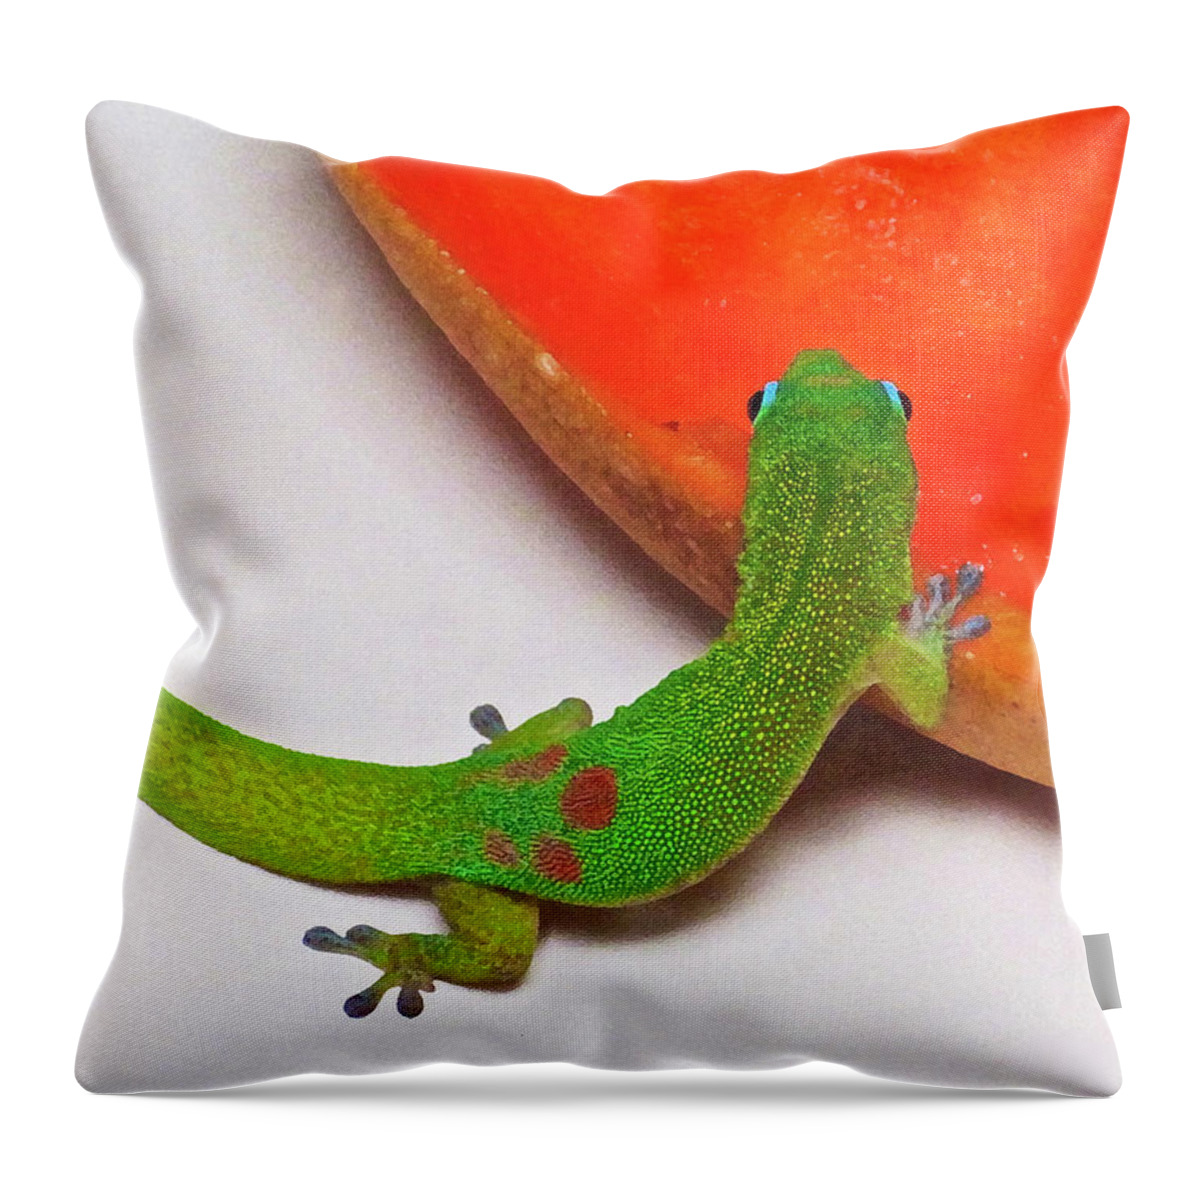 Gecko Throw Pillow featuring the photograph Gecko Eating Papaya by Bette Phelan